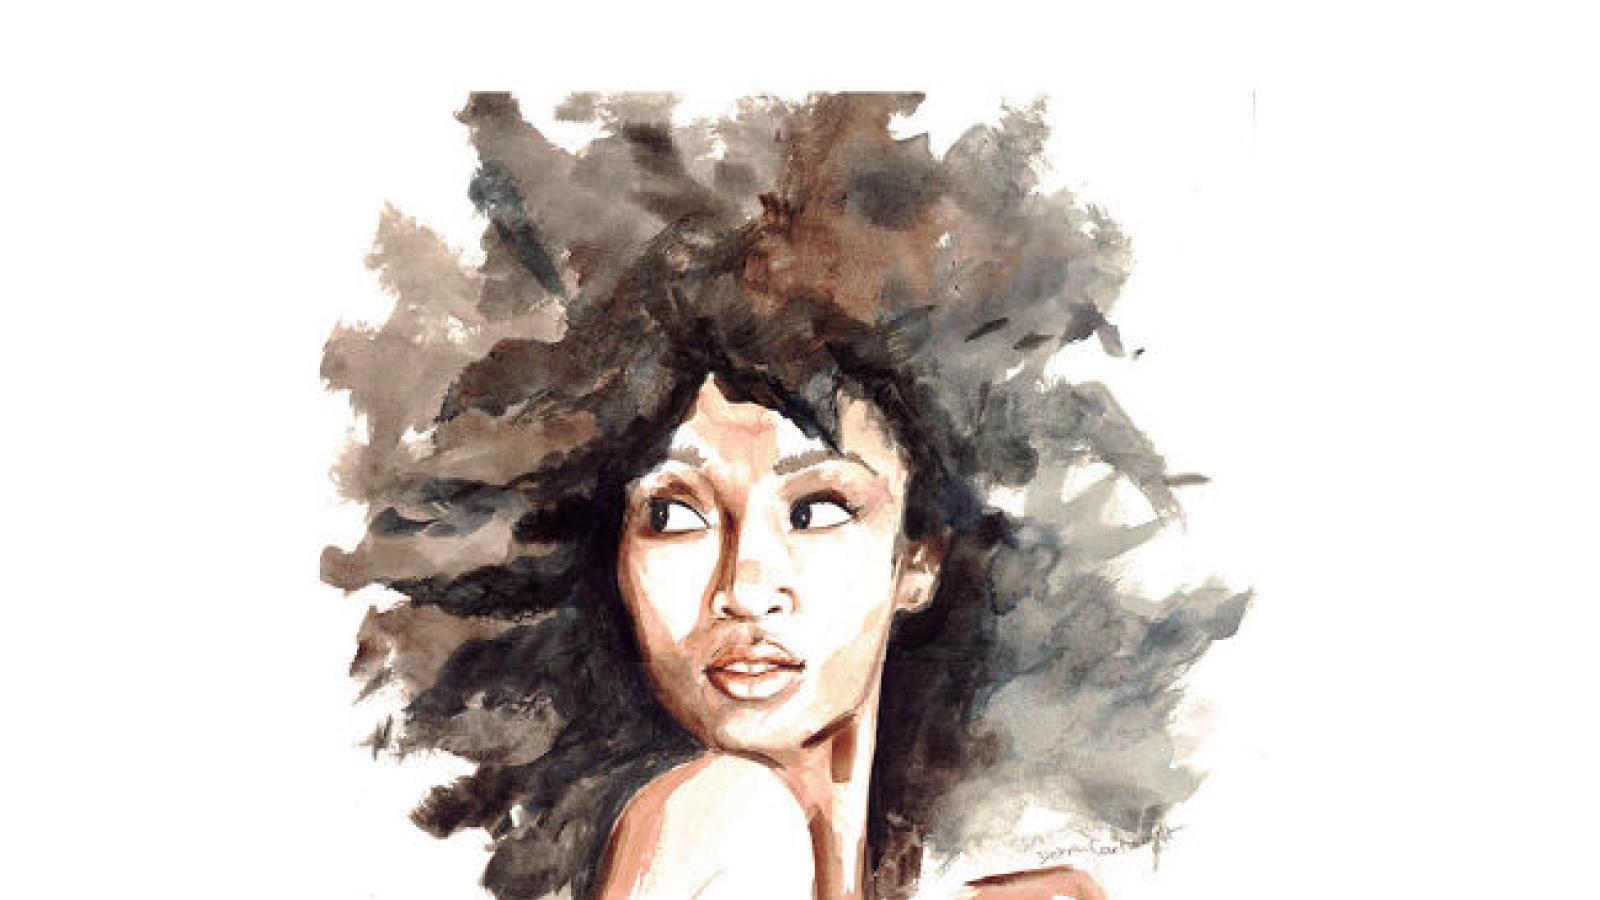 Watercolor of beautiful black woman